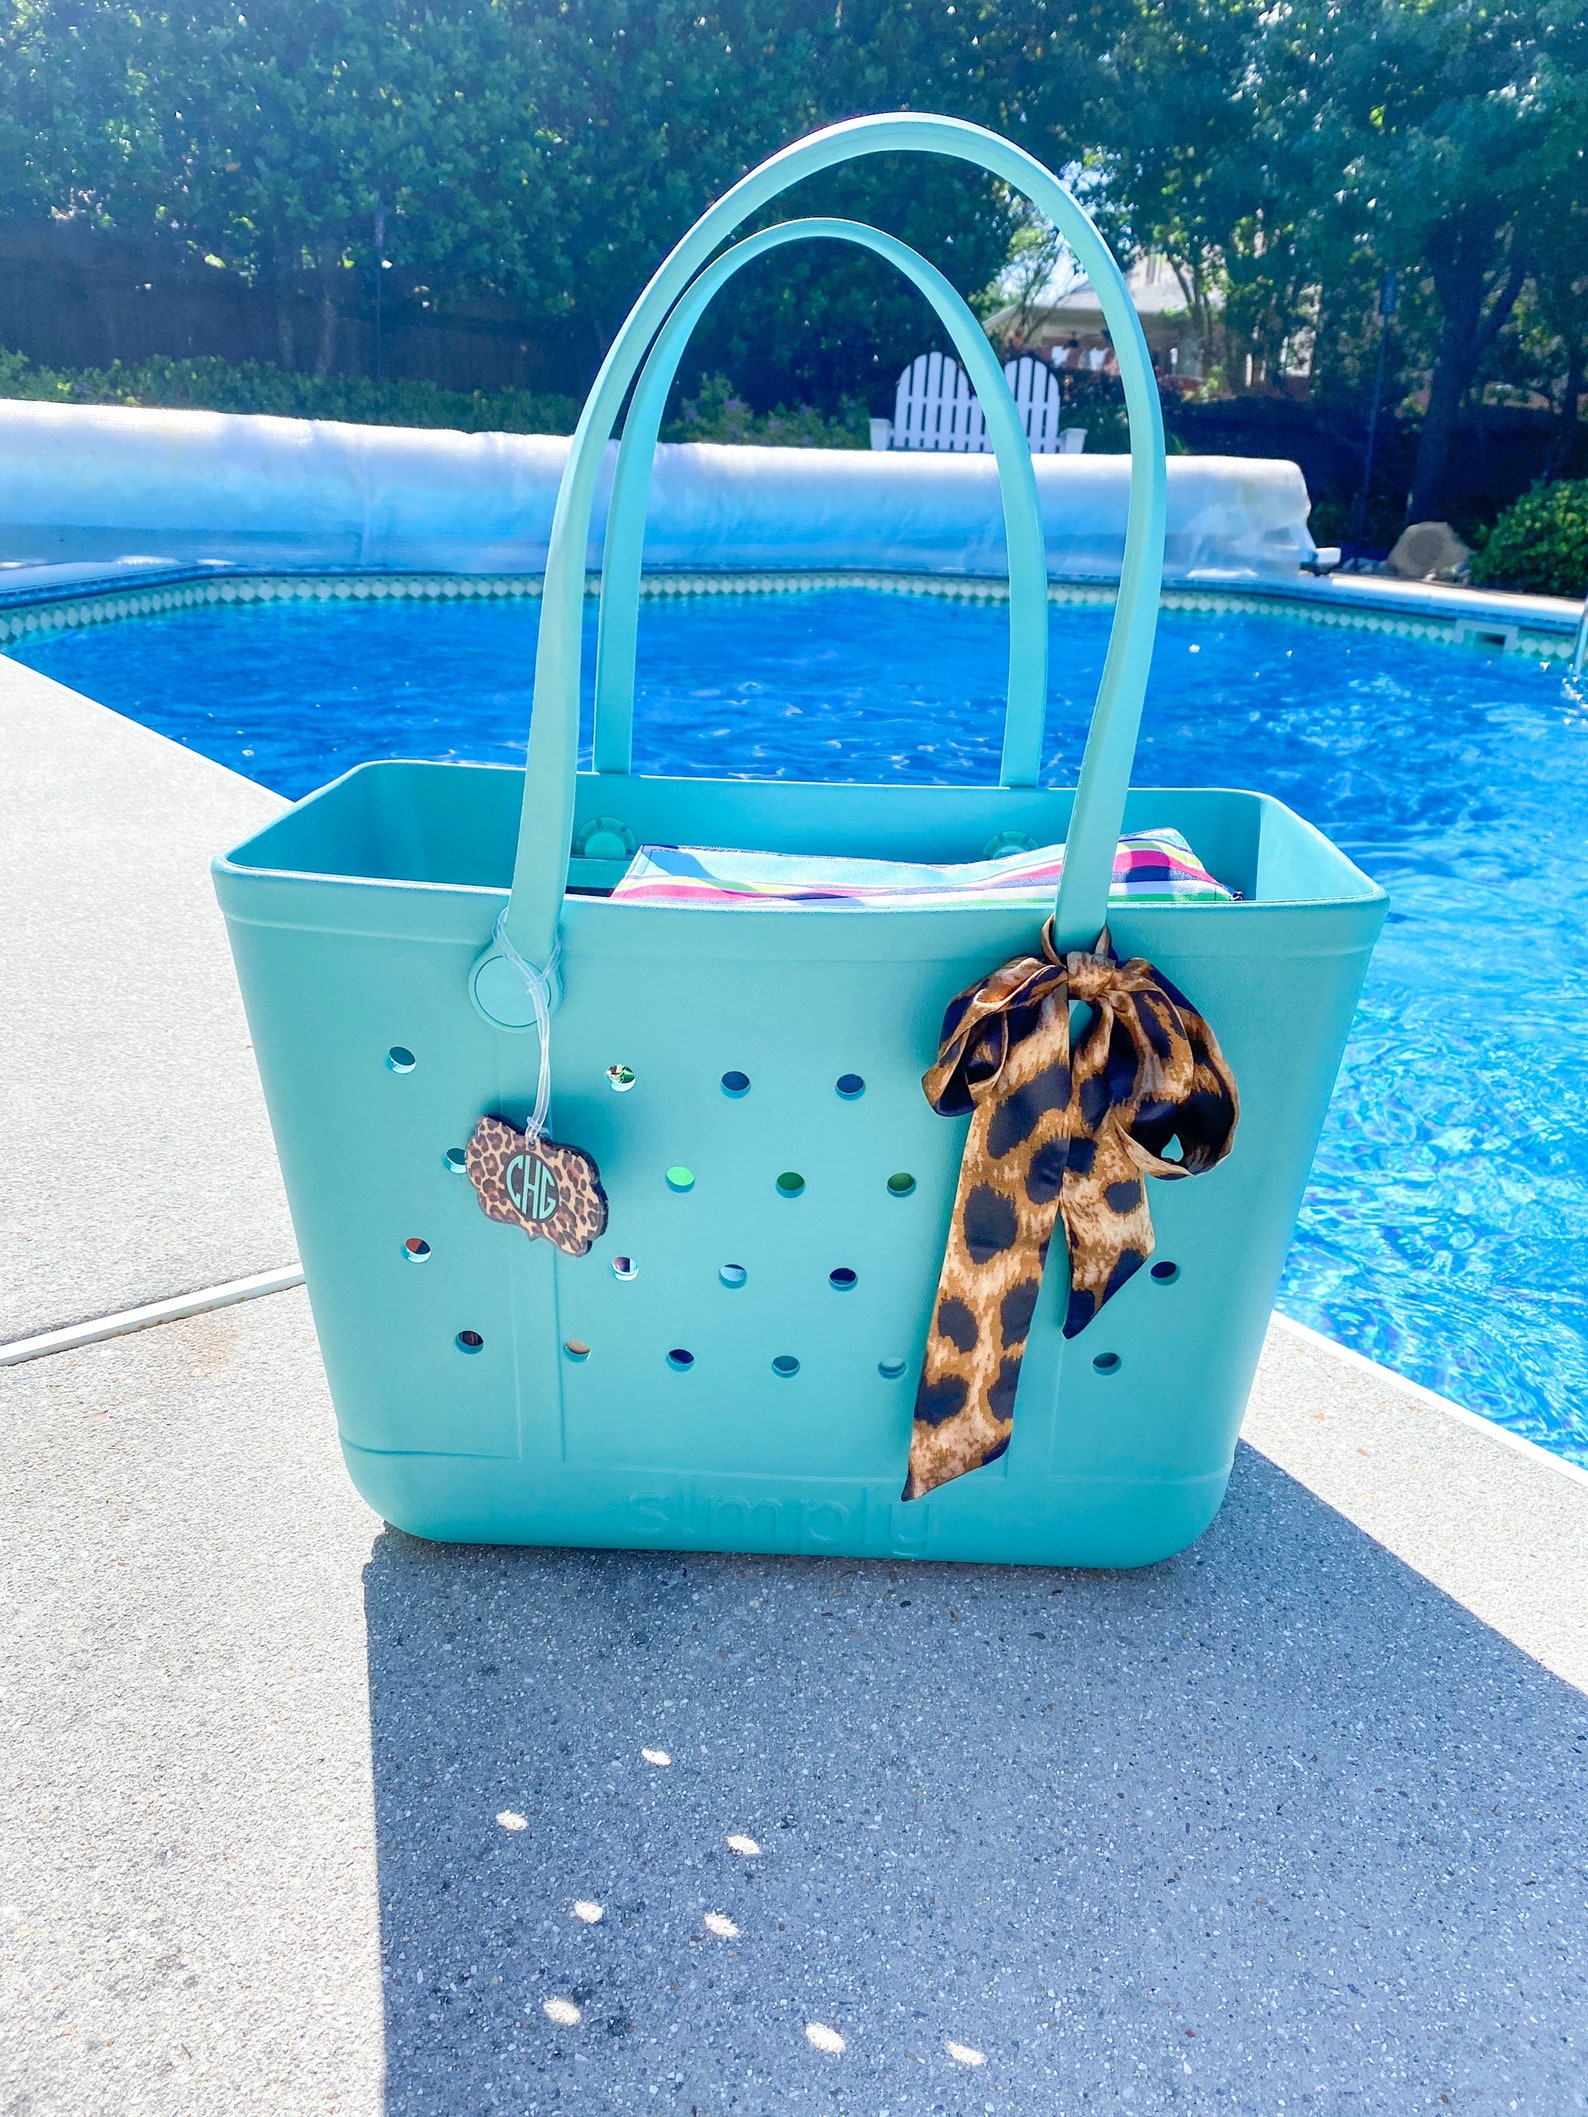 Leopard purse scarf. Bogg bag charms. Beach bag | Etsy